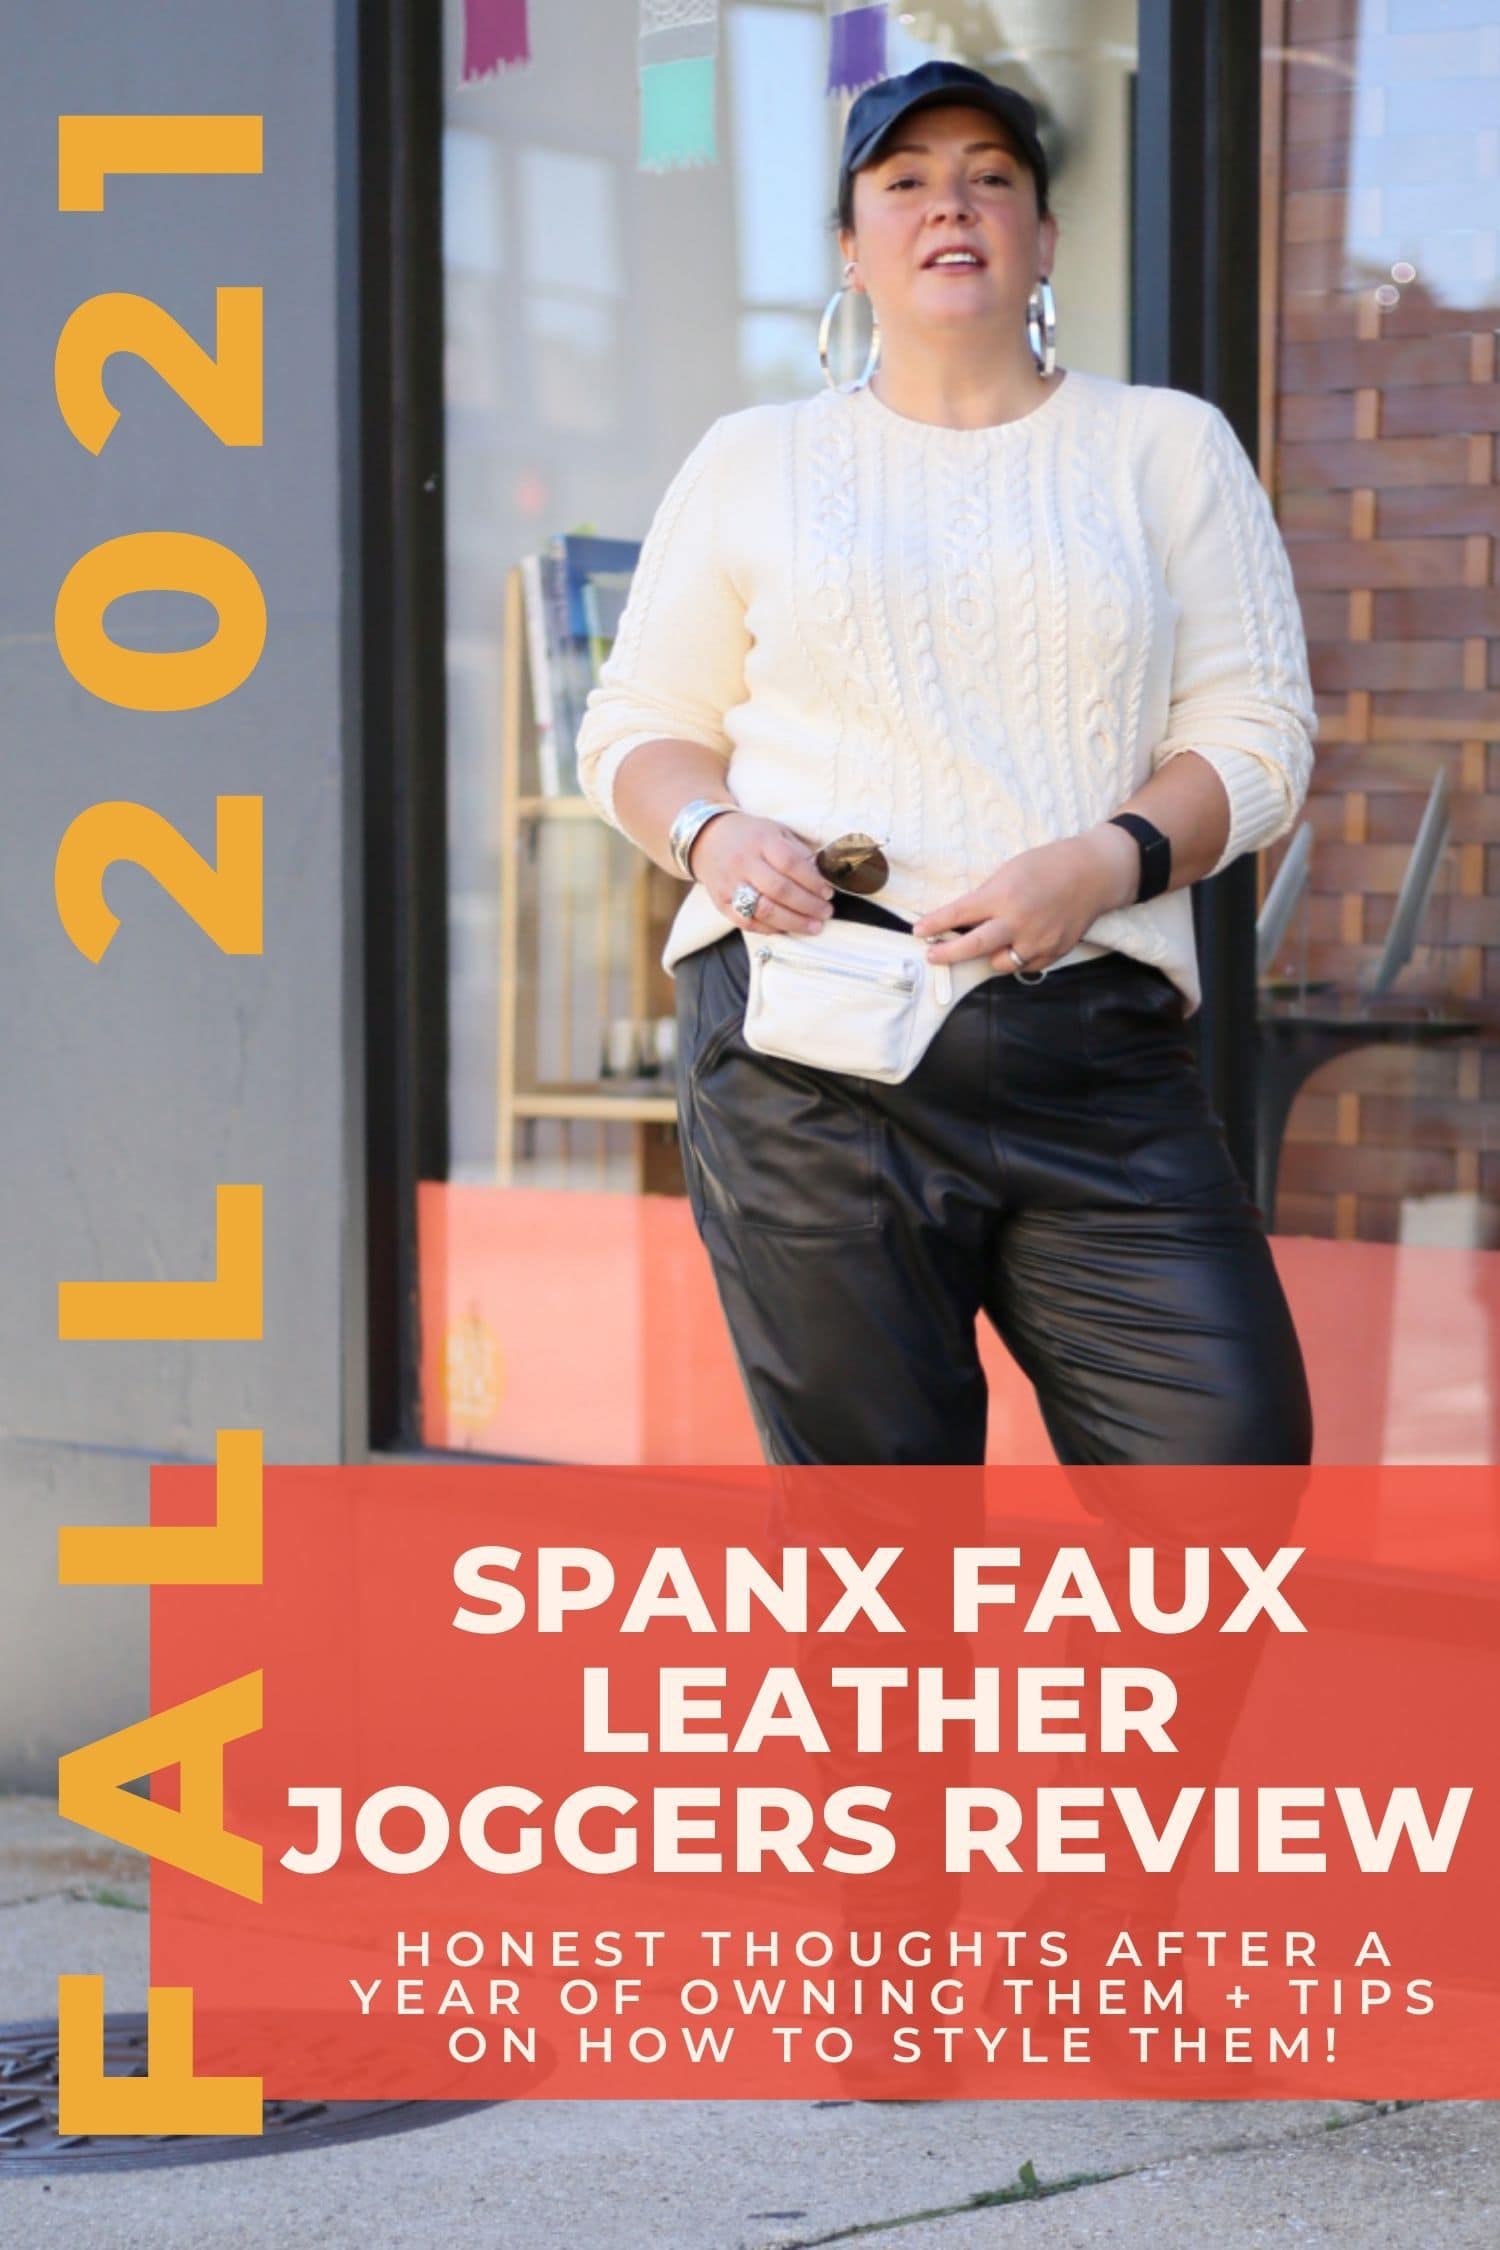 https://www.wardrobeoxygen.com/wp-content/uploads/2021/09/spanx-faux-leather-joggers-review-2021.jpeg